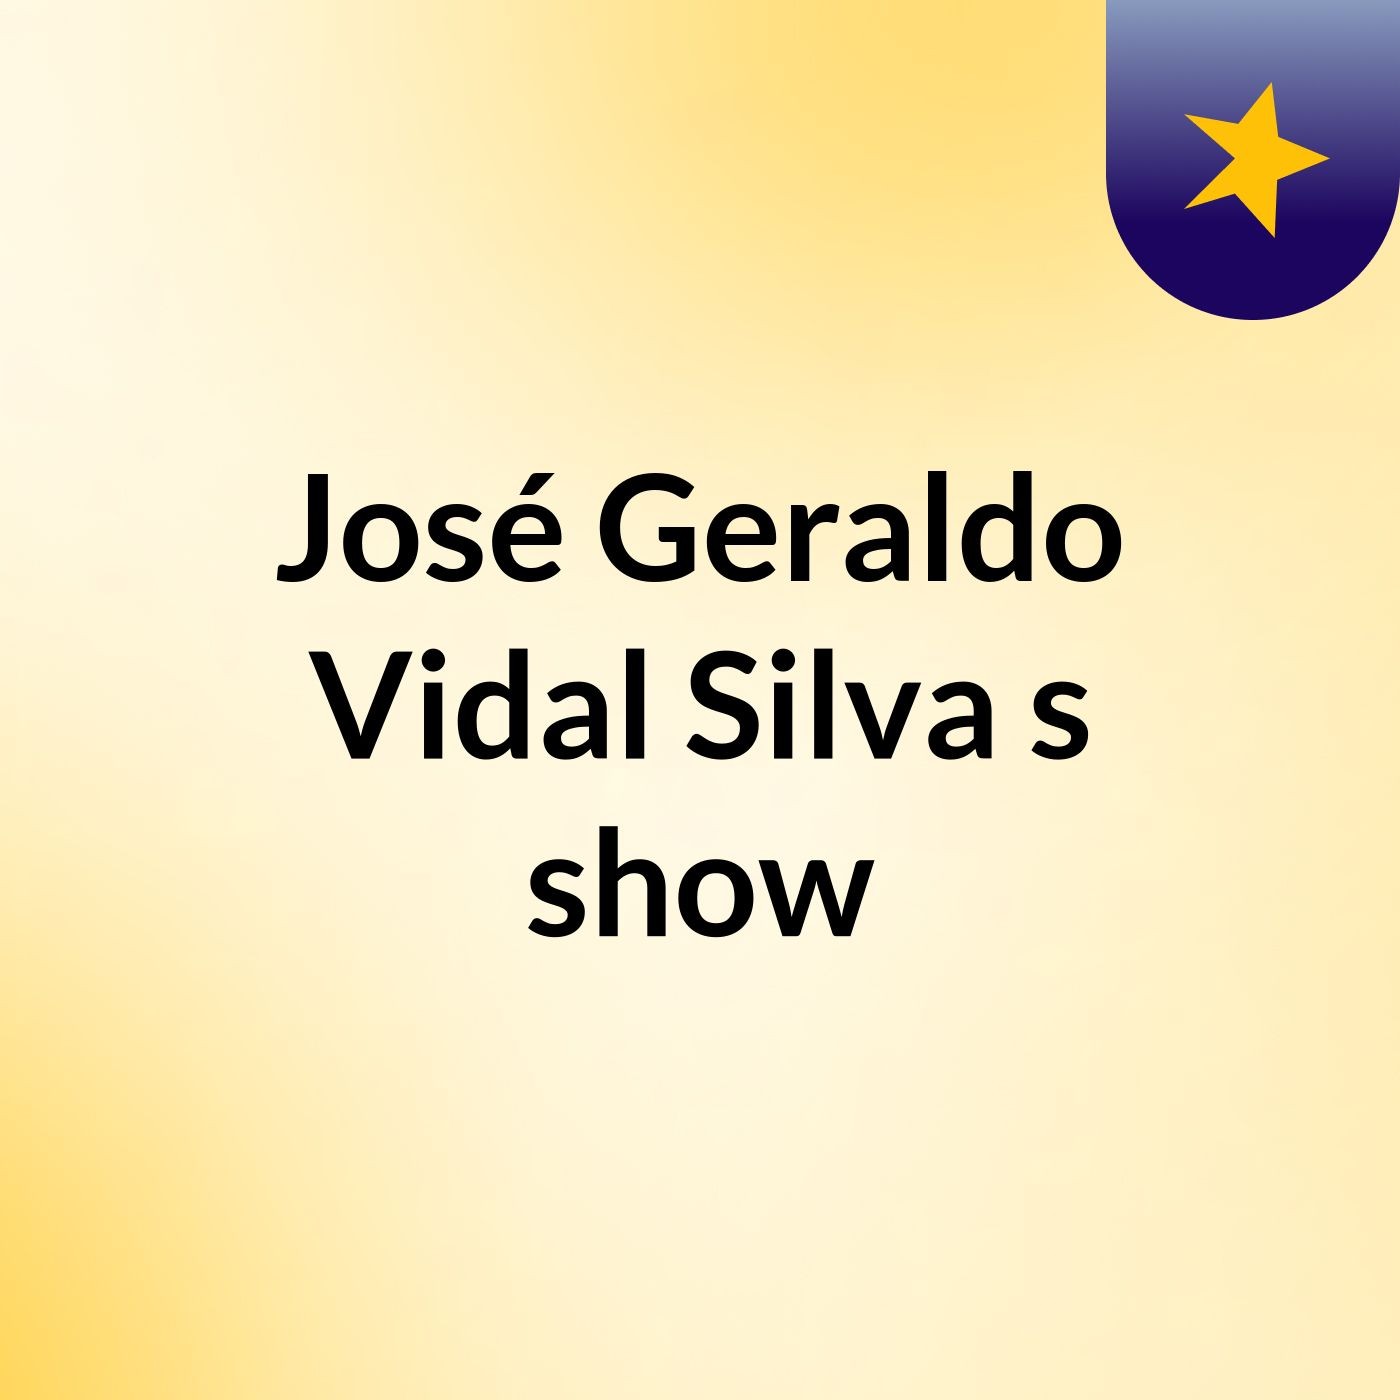 José Geraldo Vidal Silva's show